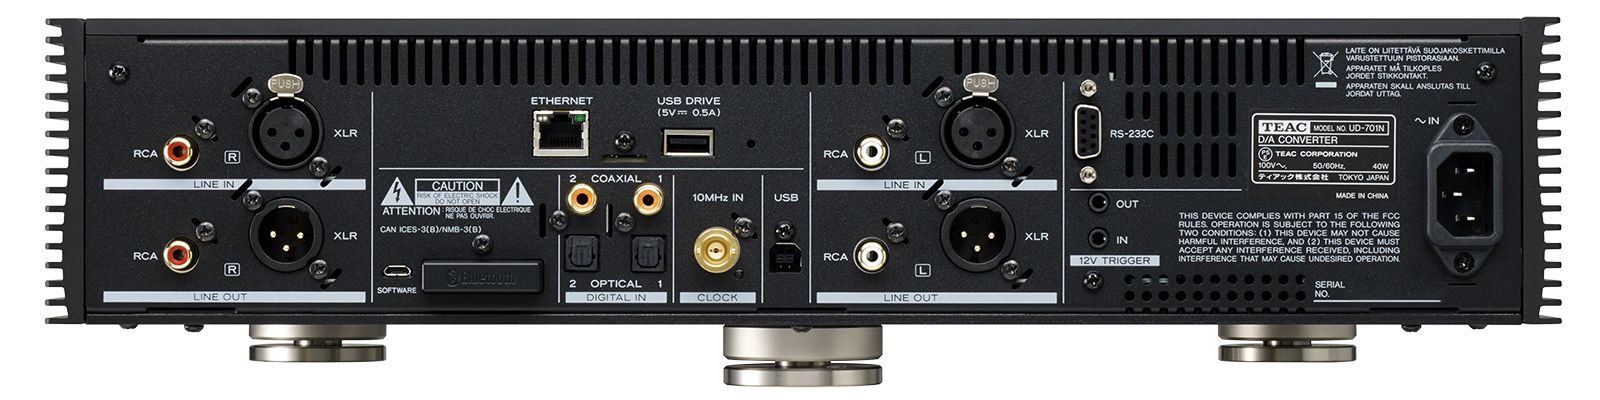 UD-701N digitaal-analoog helikonverter